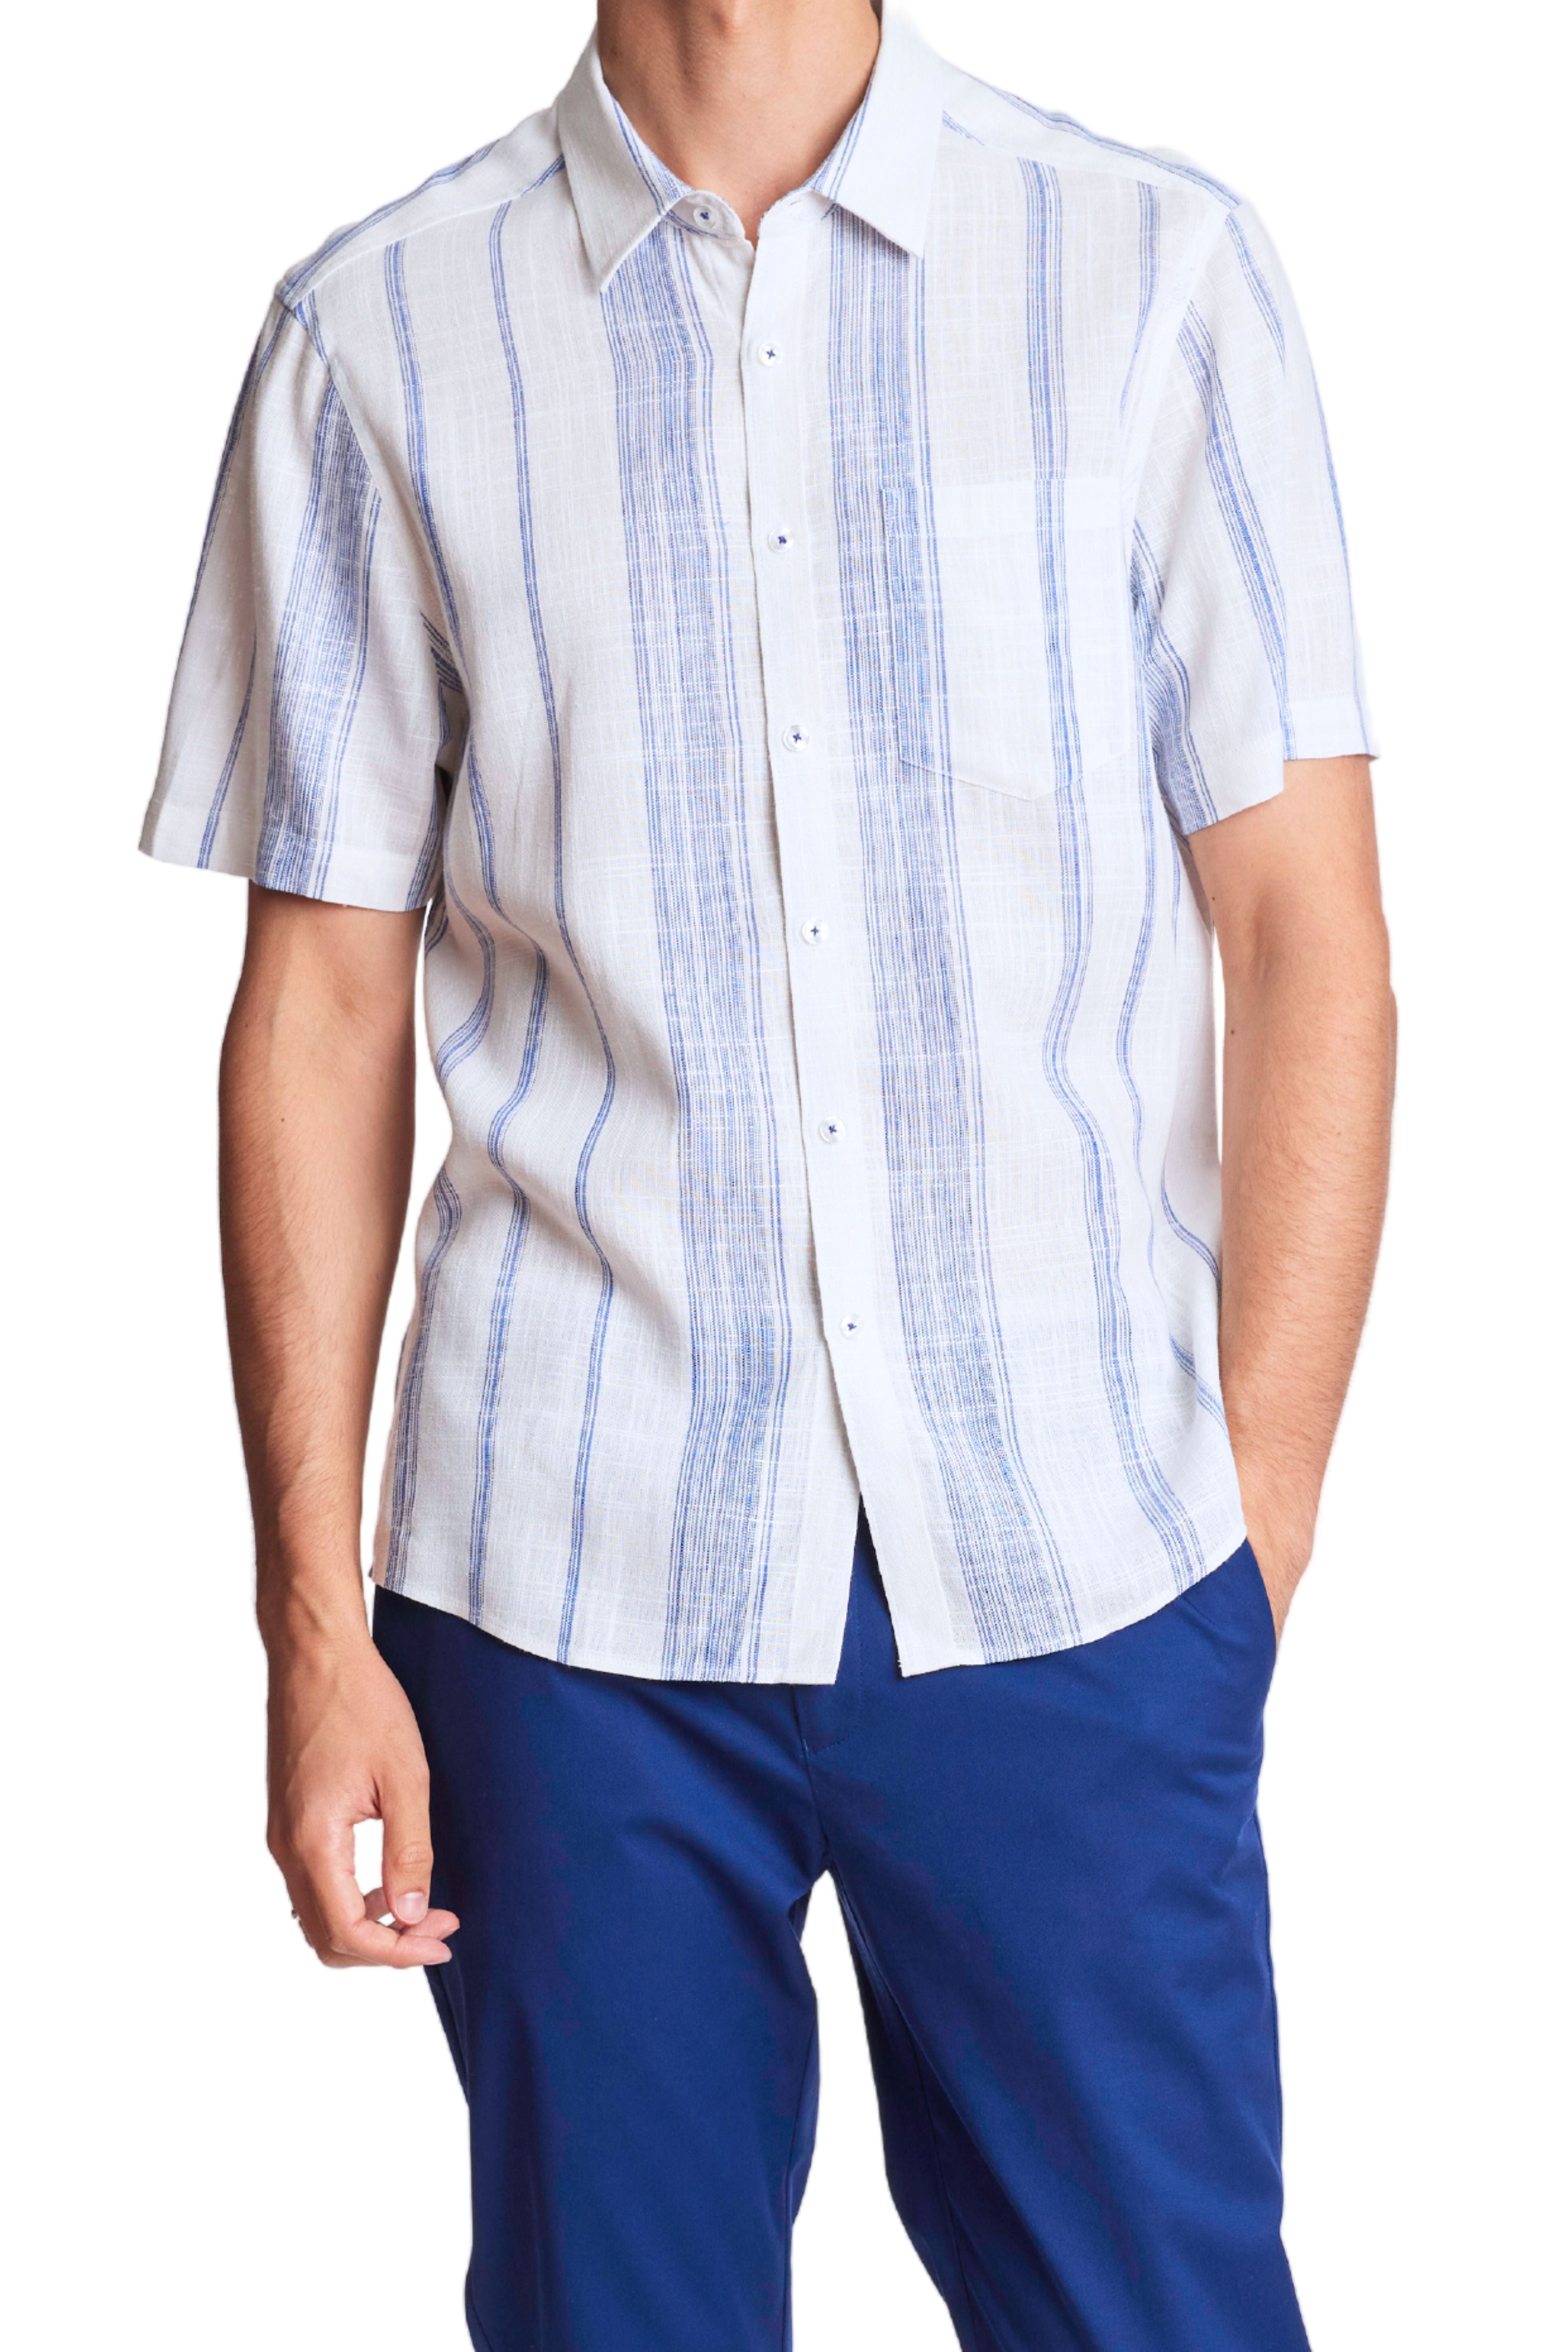 Soleil S/S Shirt - White & Blue Variegated